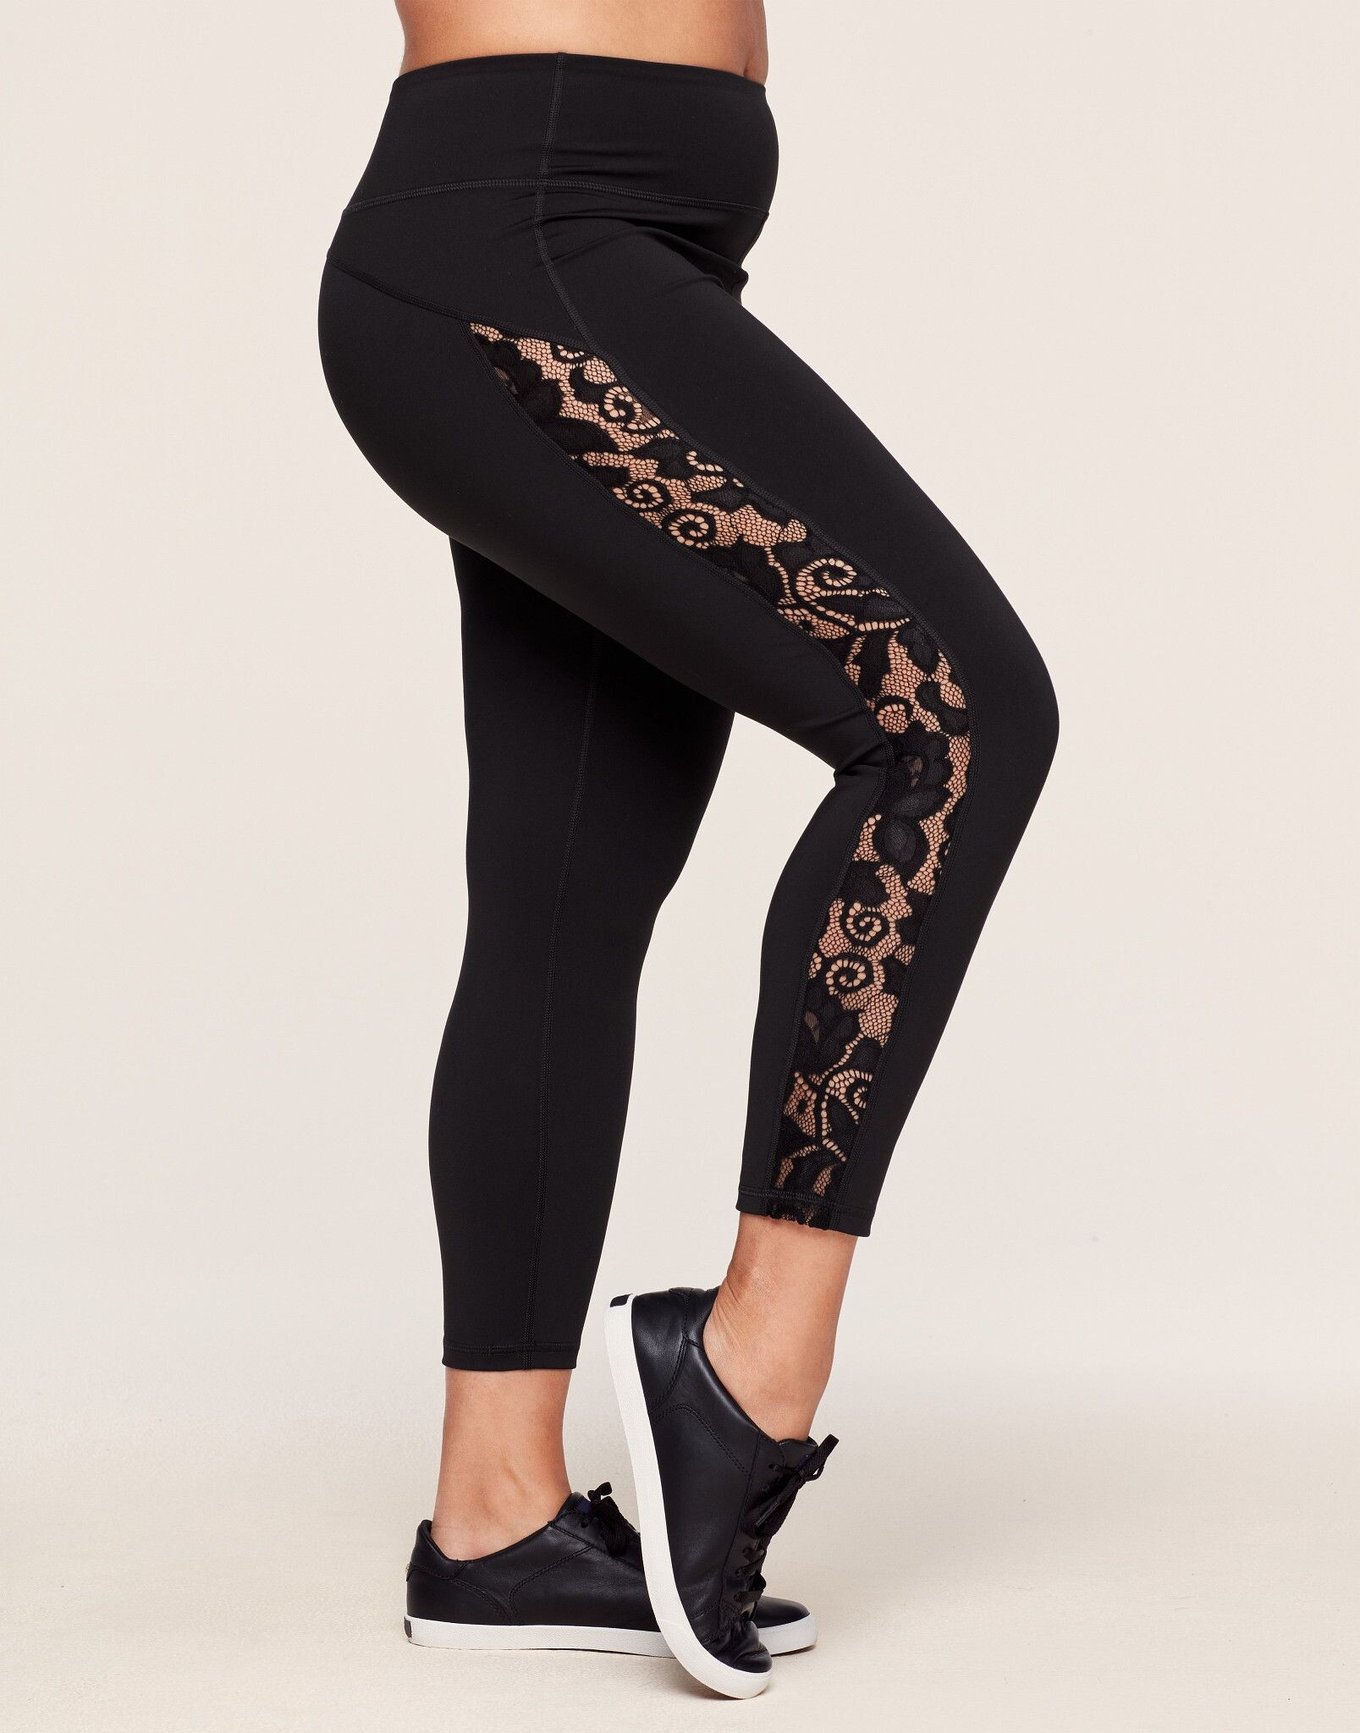 Lulu lemon athletica black leggings with floral lace - Depop